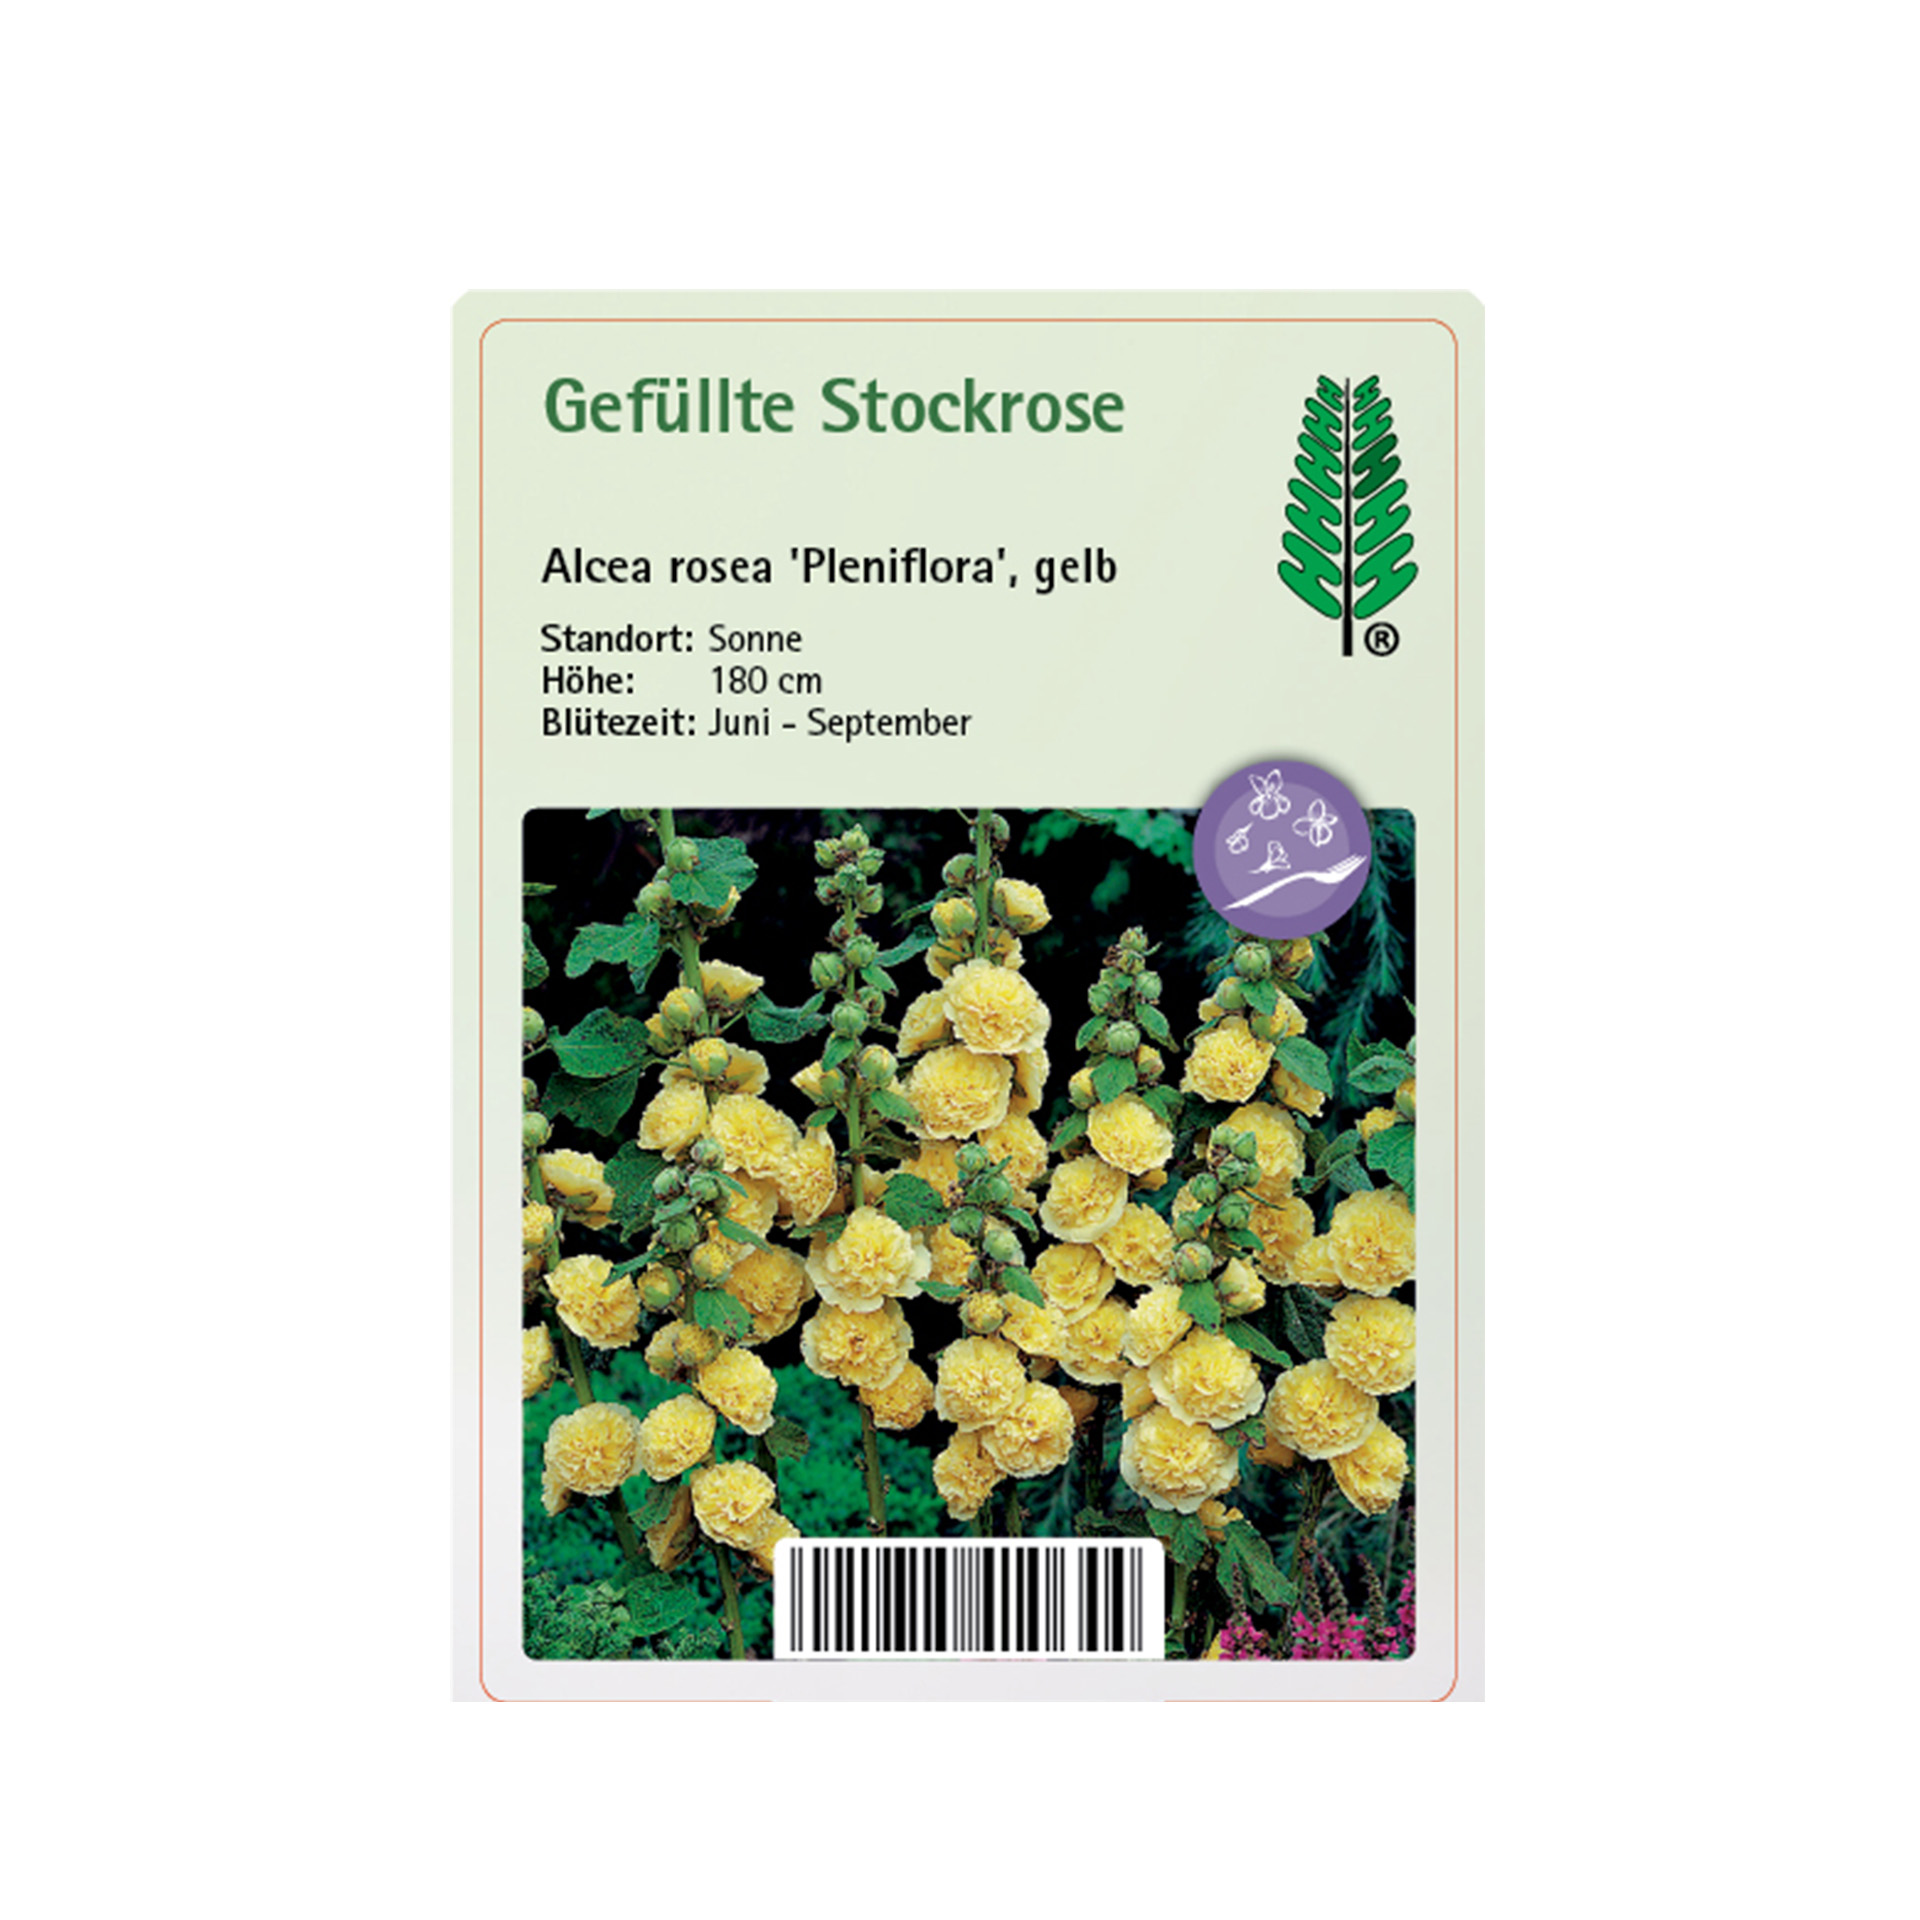 Gefüllte Stockrose - Alcea rosea 'Pleniflora' gelb, 11cm Topf